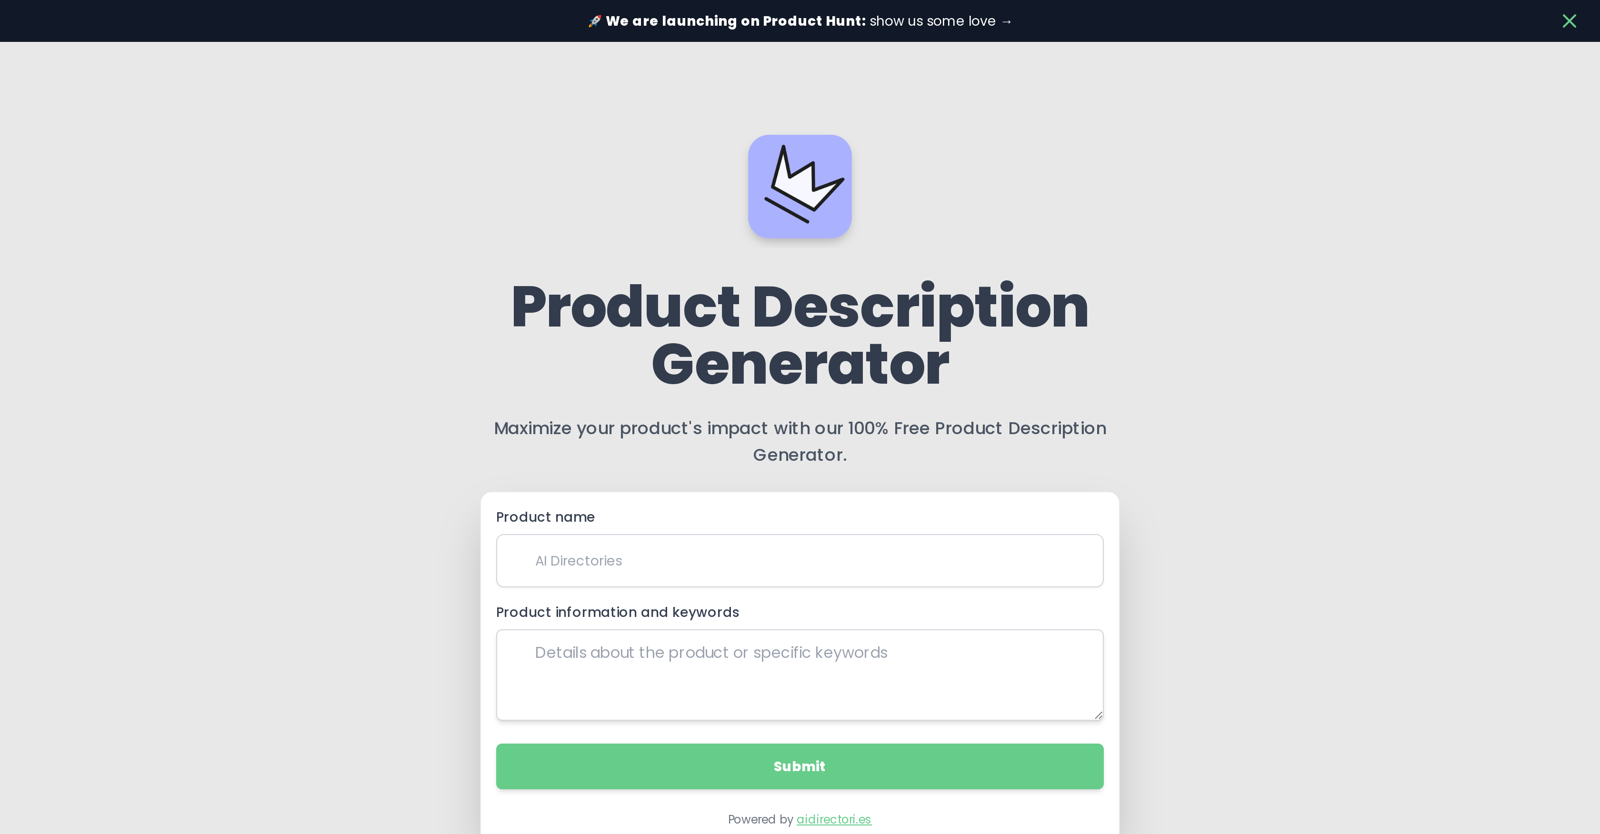 Product Description Generator by AIDirectories website